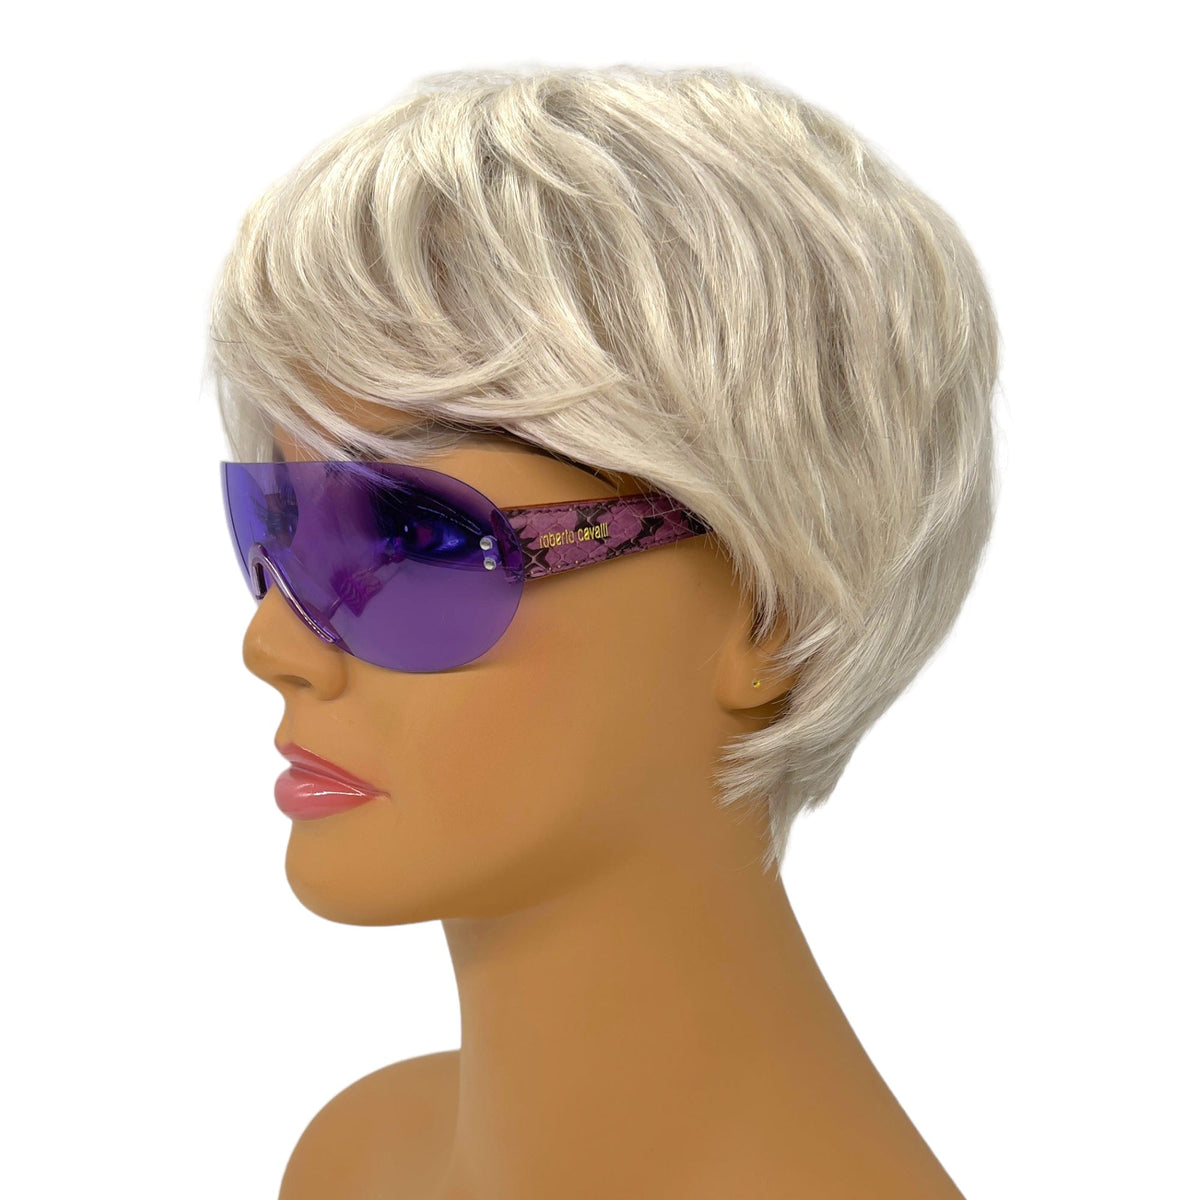 Roberto Cavalli Python Print Shield Sunglasses - Lavender & Black